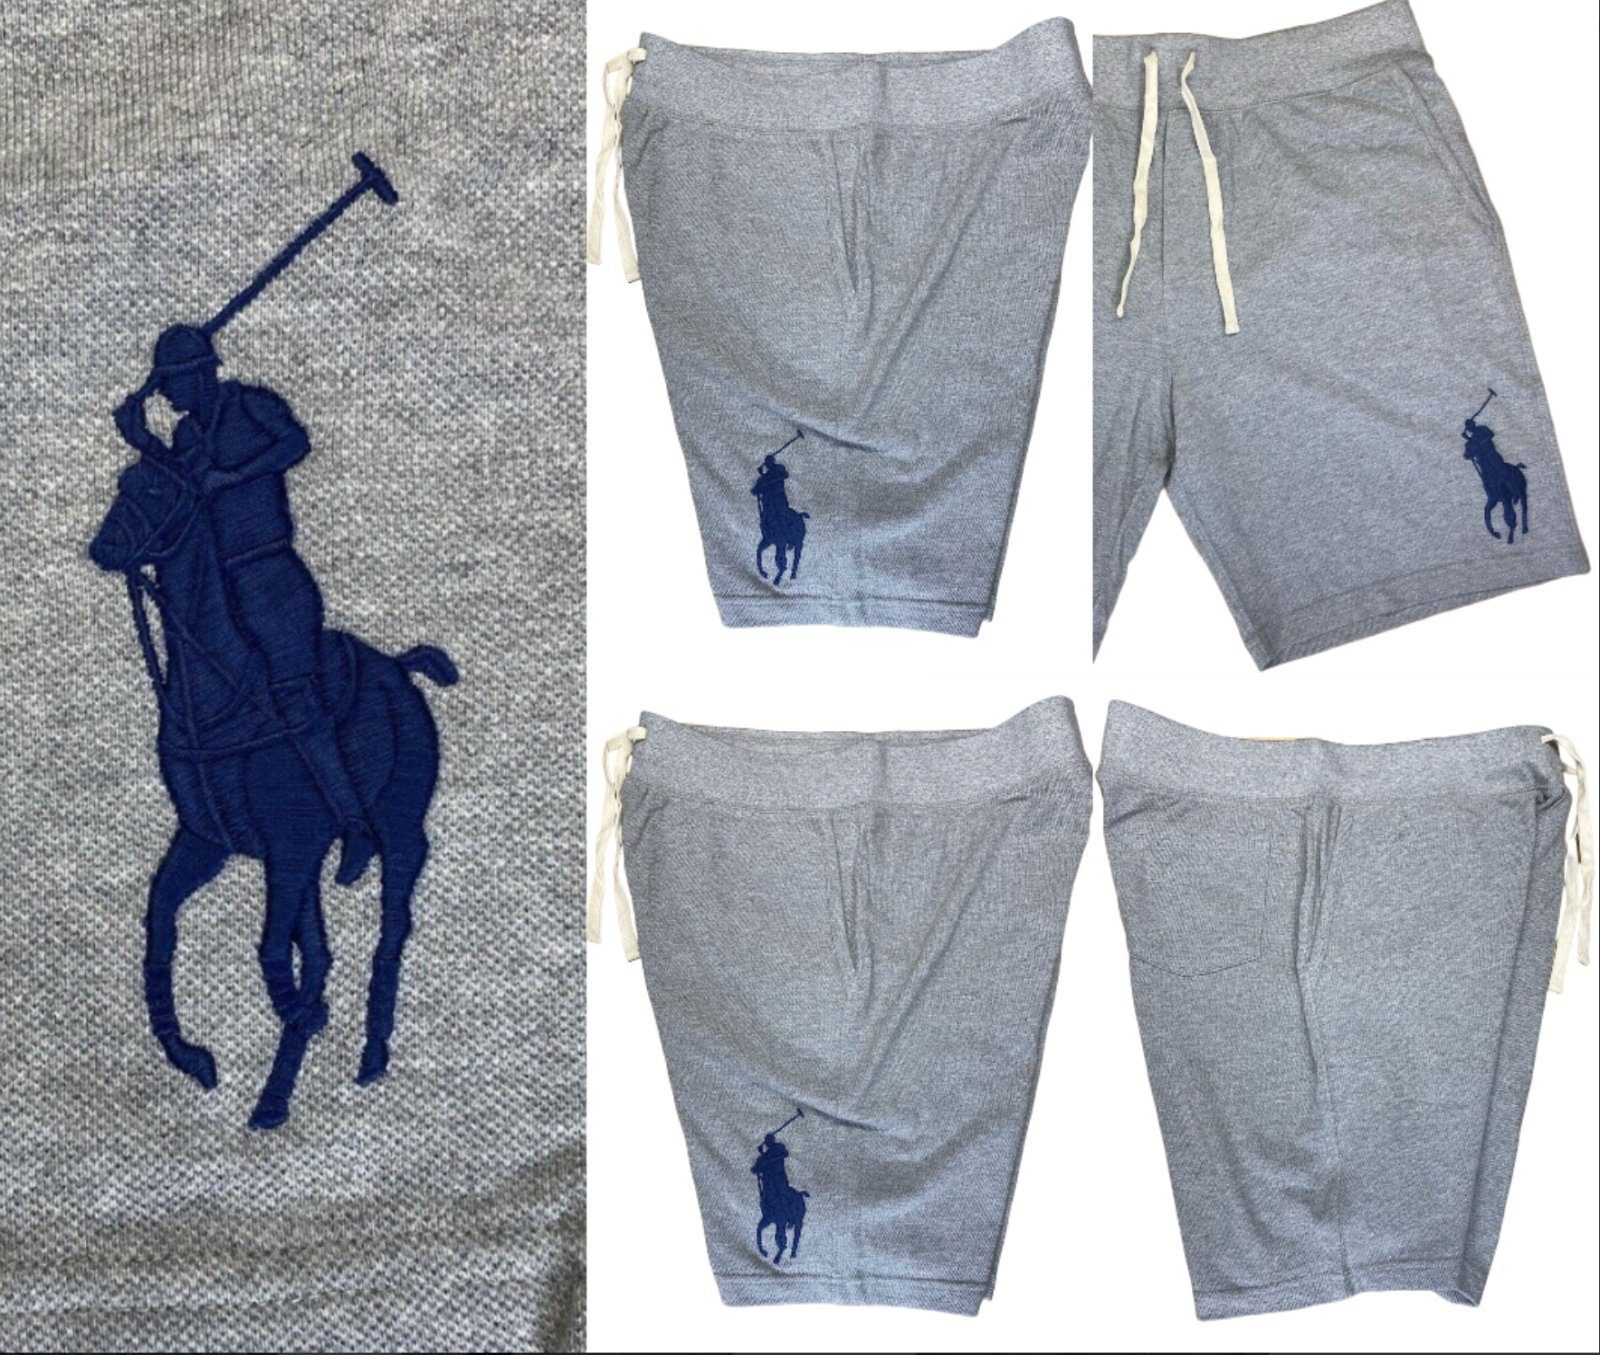 Ralph Lauren Shorts POLO RALPH LAUREN Drawstring Big Pony Shorts Bermuda Mesh Pants Trouse